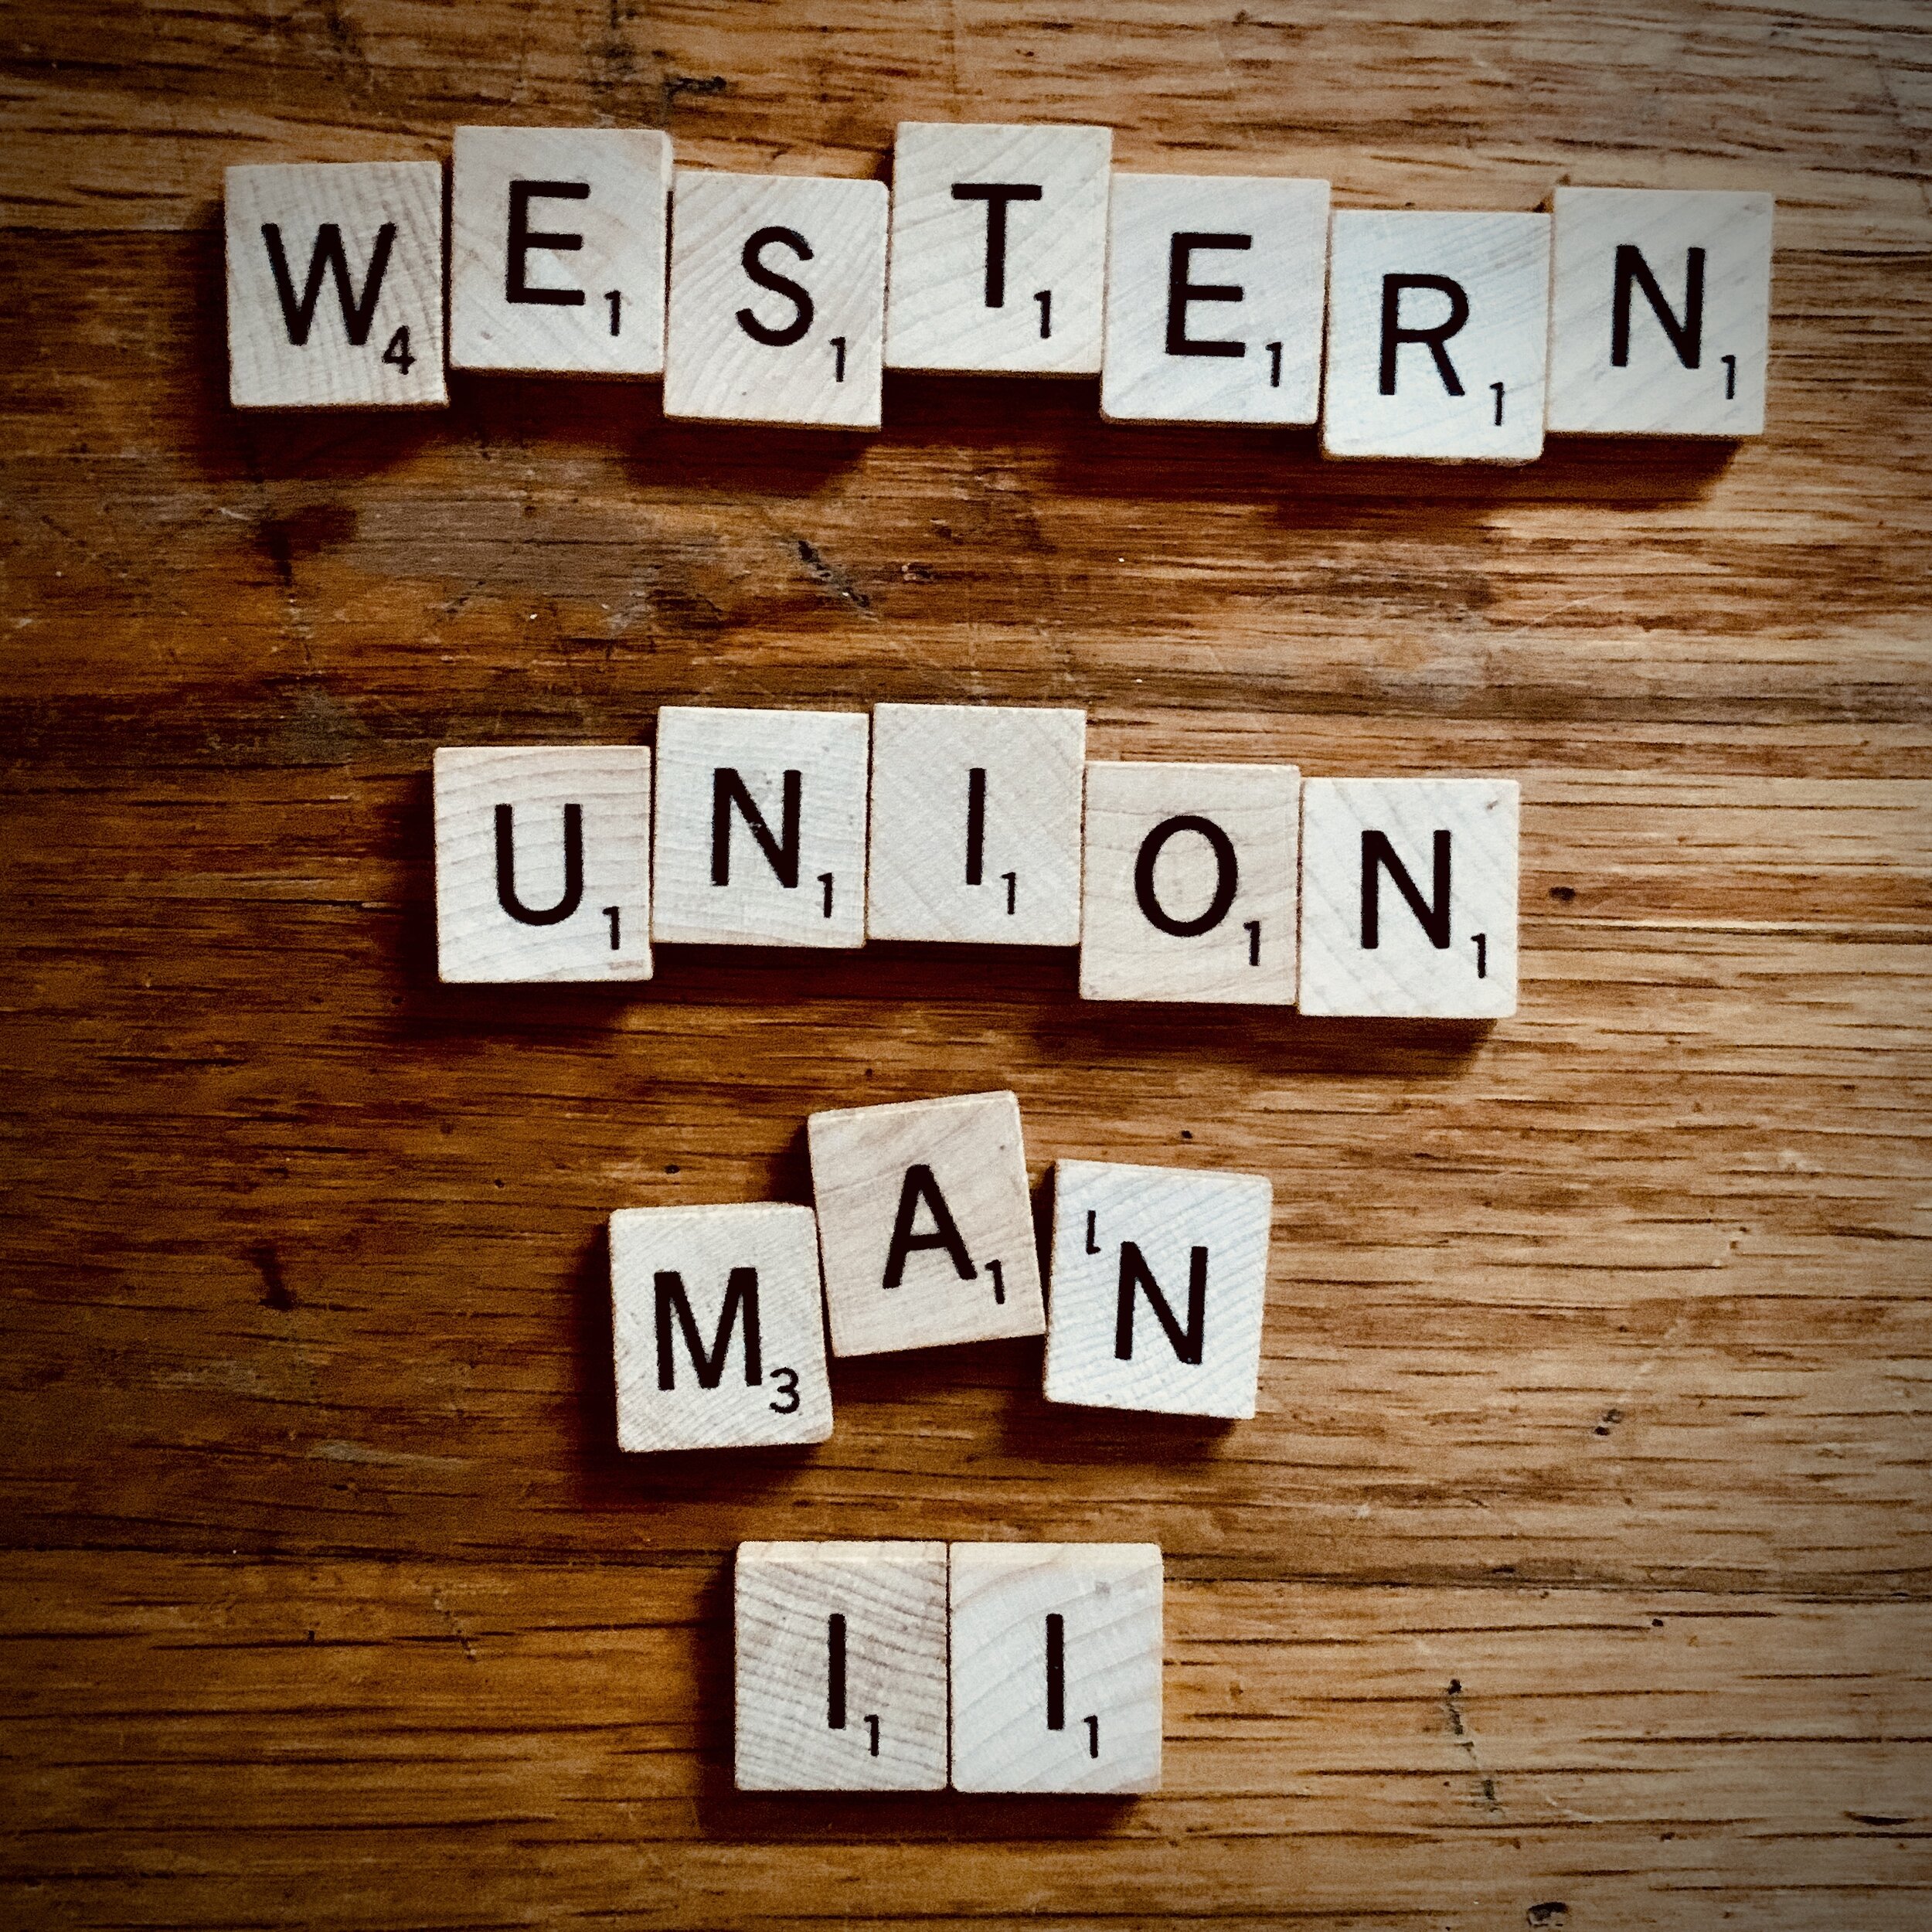 Western Union Man II